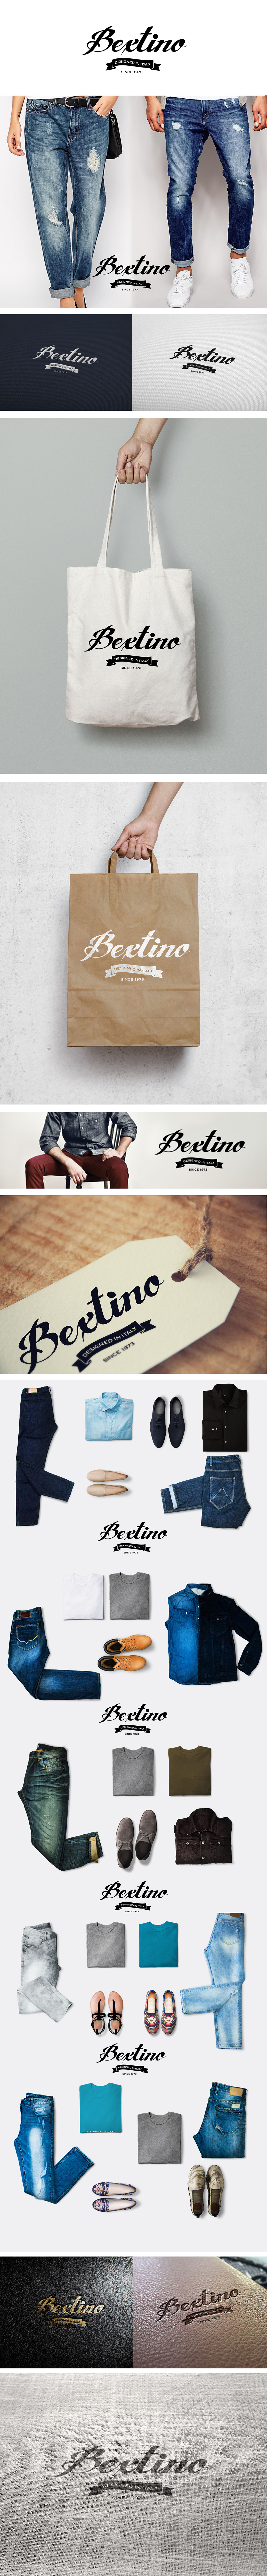 logo brand unisex jeans identity art design new Project Denim